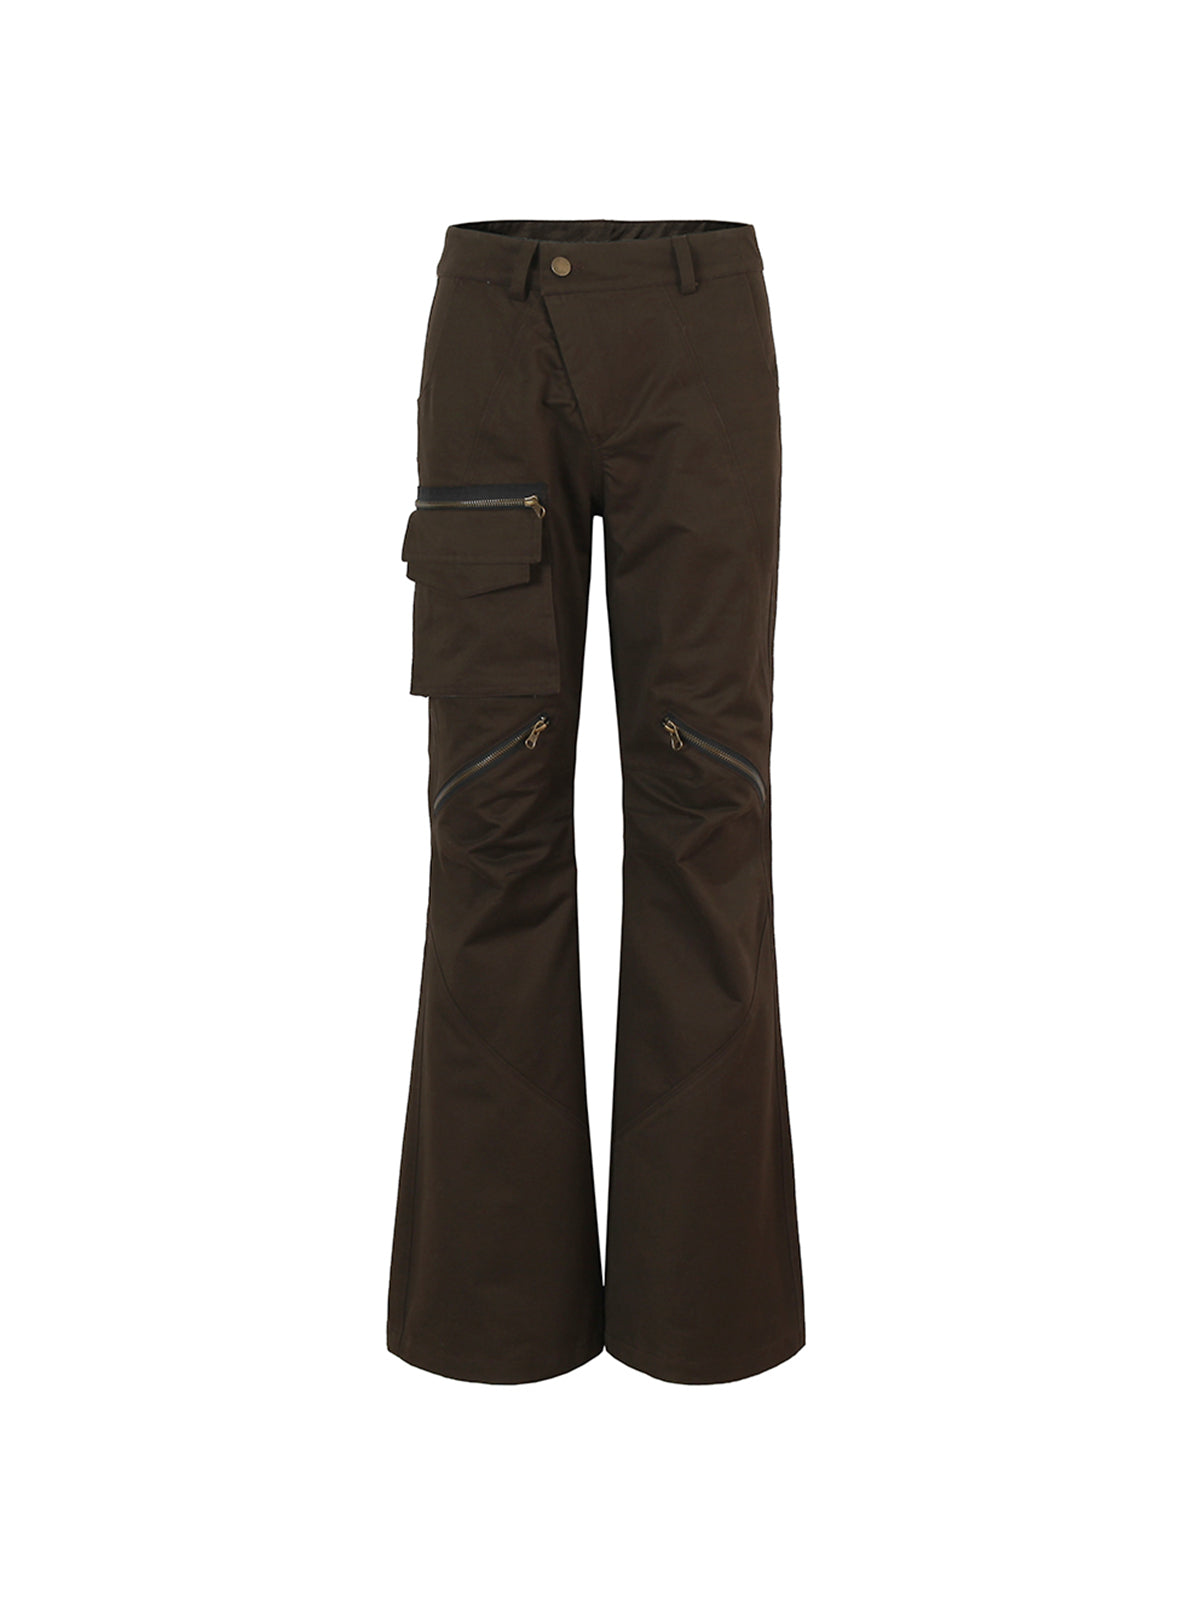 Dark brown long-legged pants